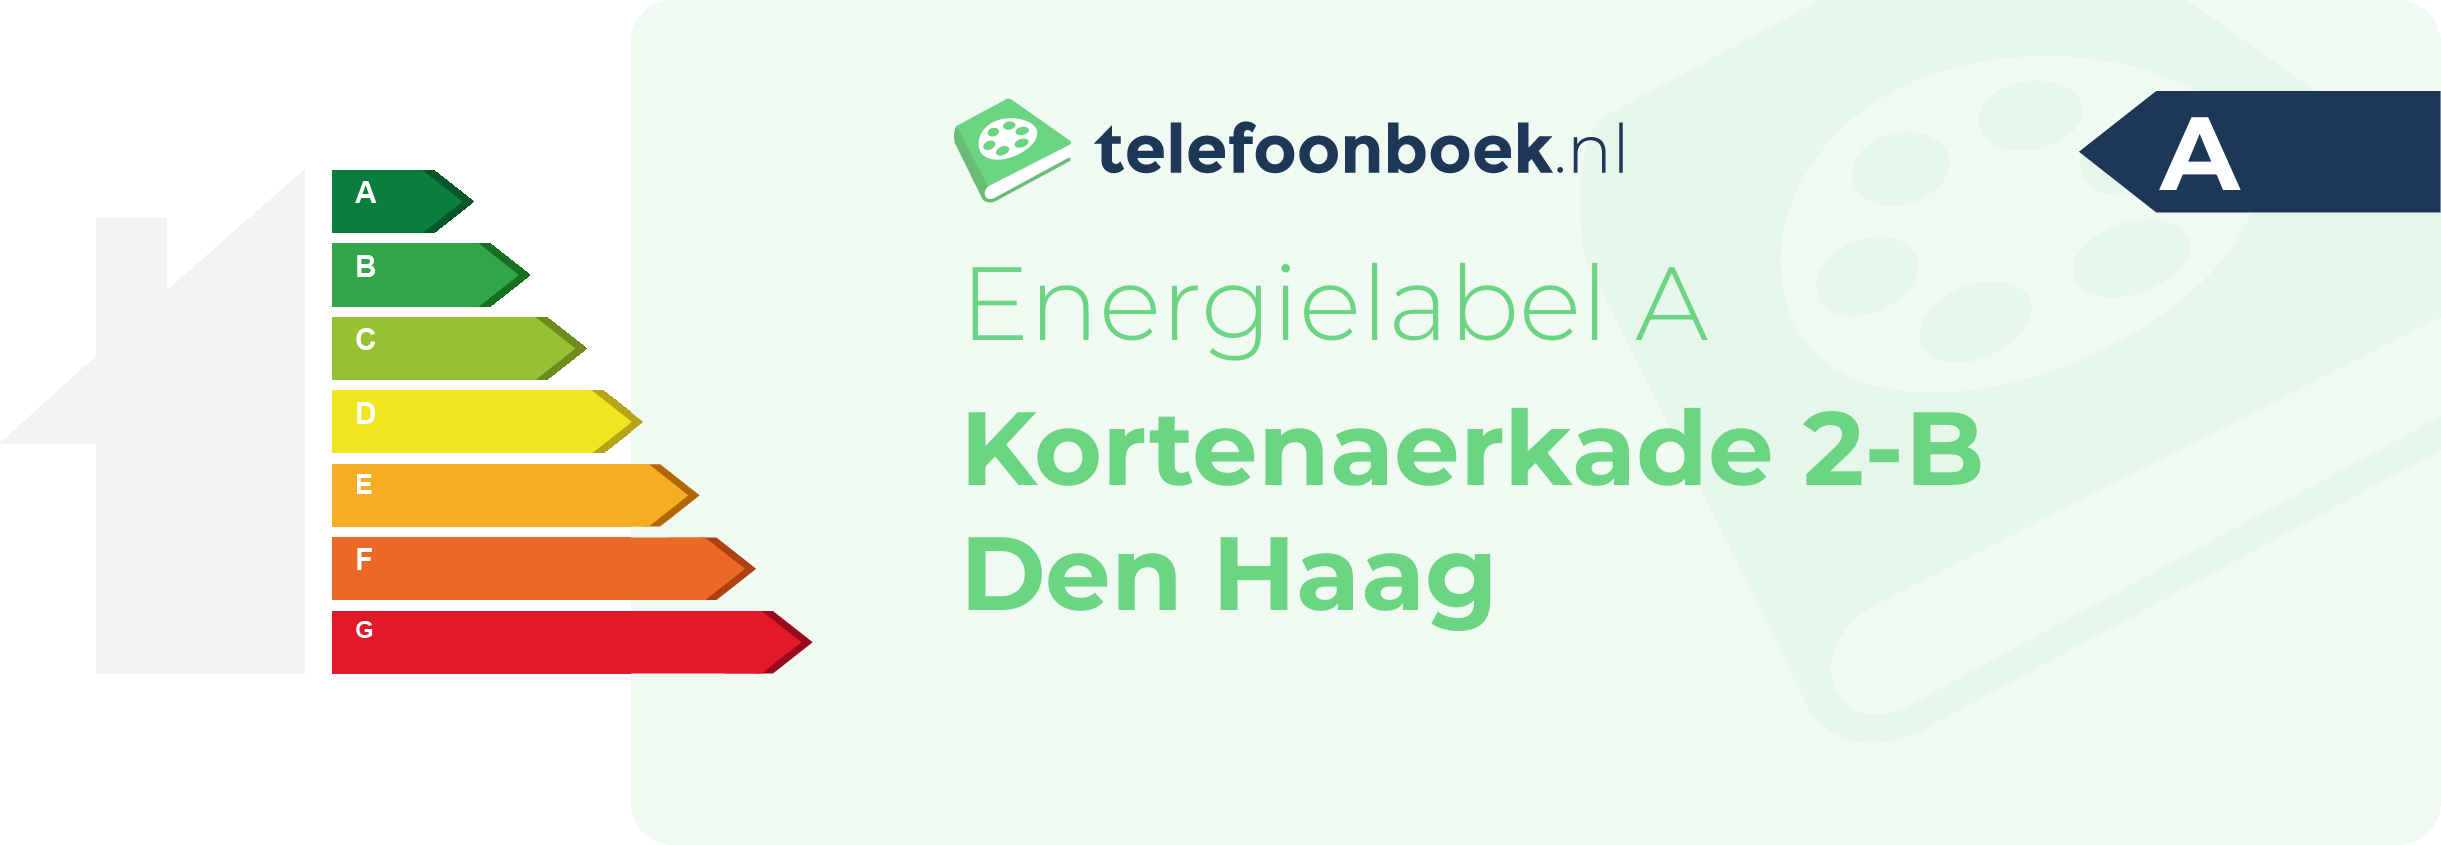 Energielabel Kortenaerkade 2-B Den Haag